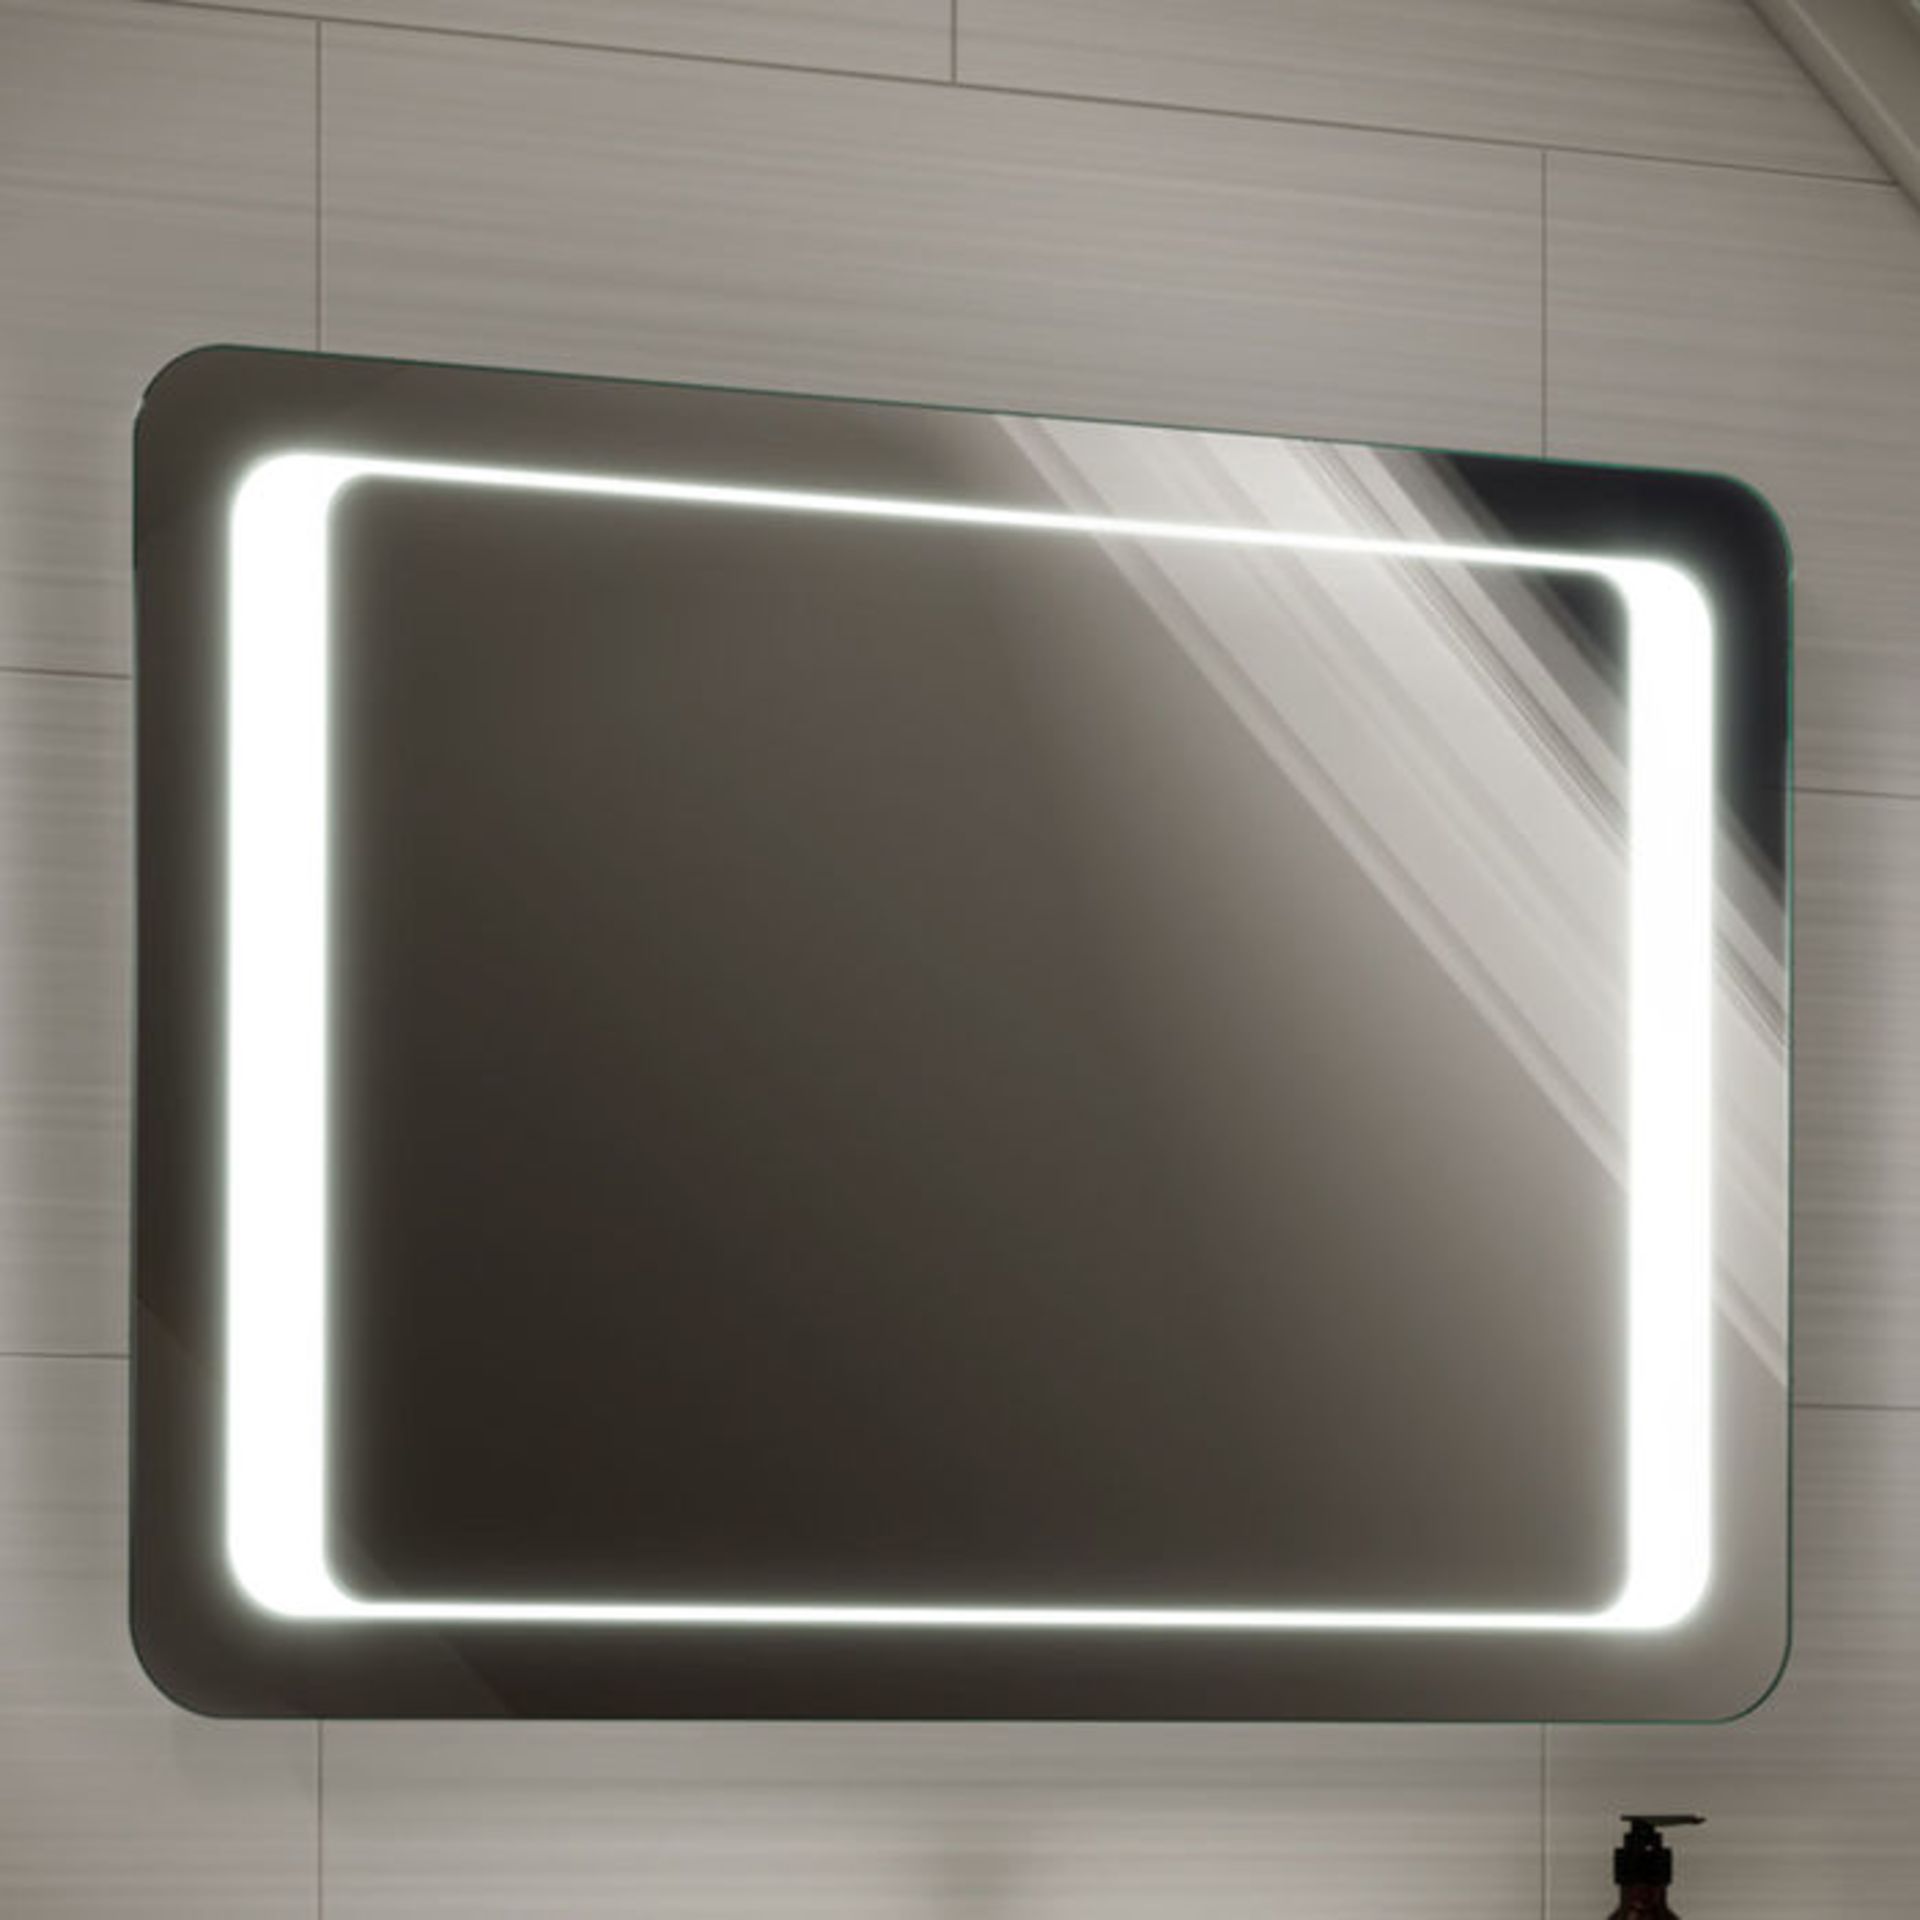 (T64) 800x600mm Quasar Illuminated LED Mirror. RRP £349.99.Energy efficient LED lighting with IP44